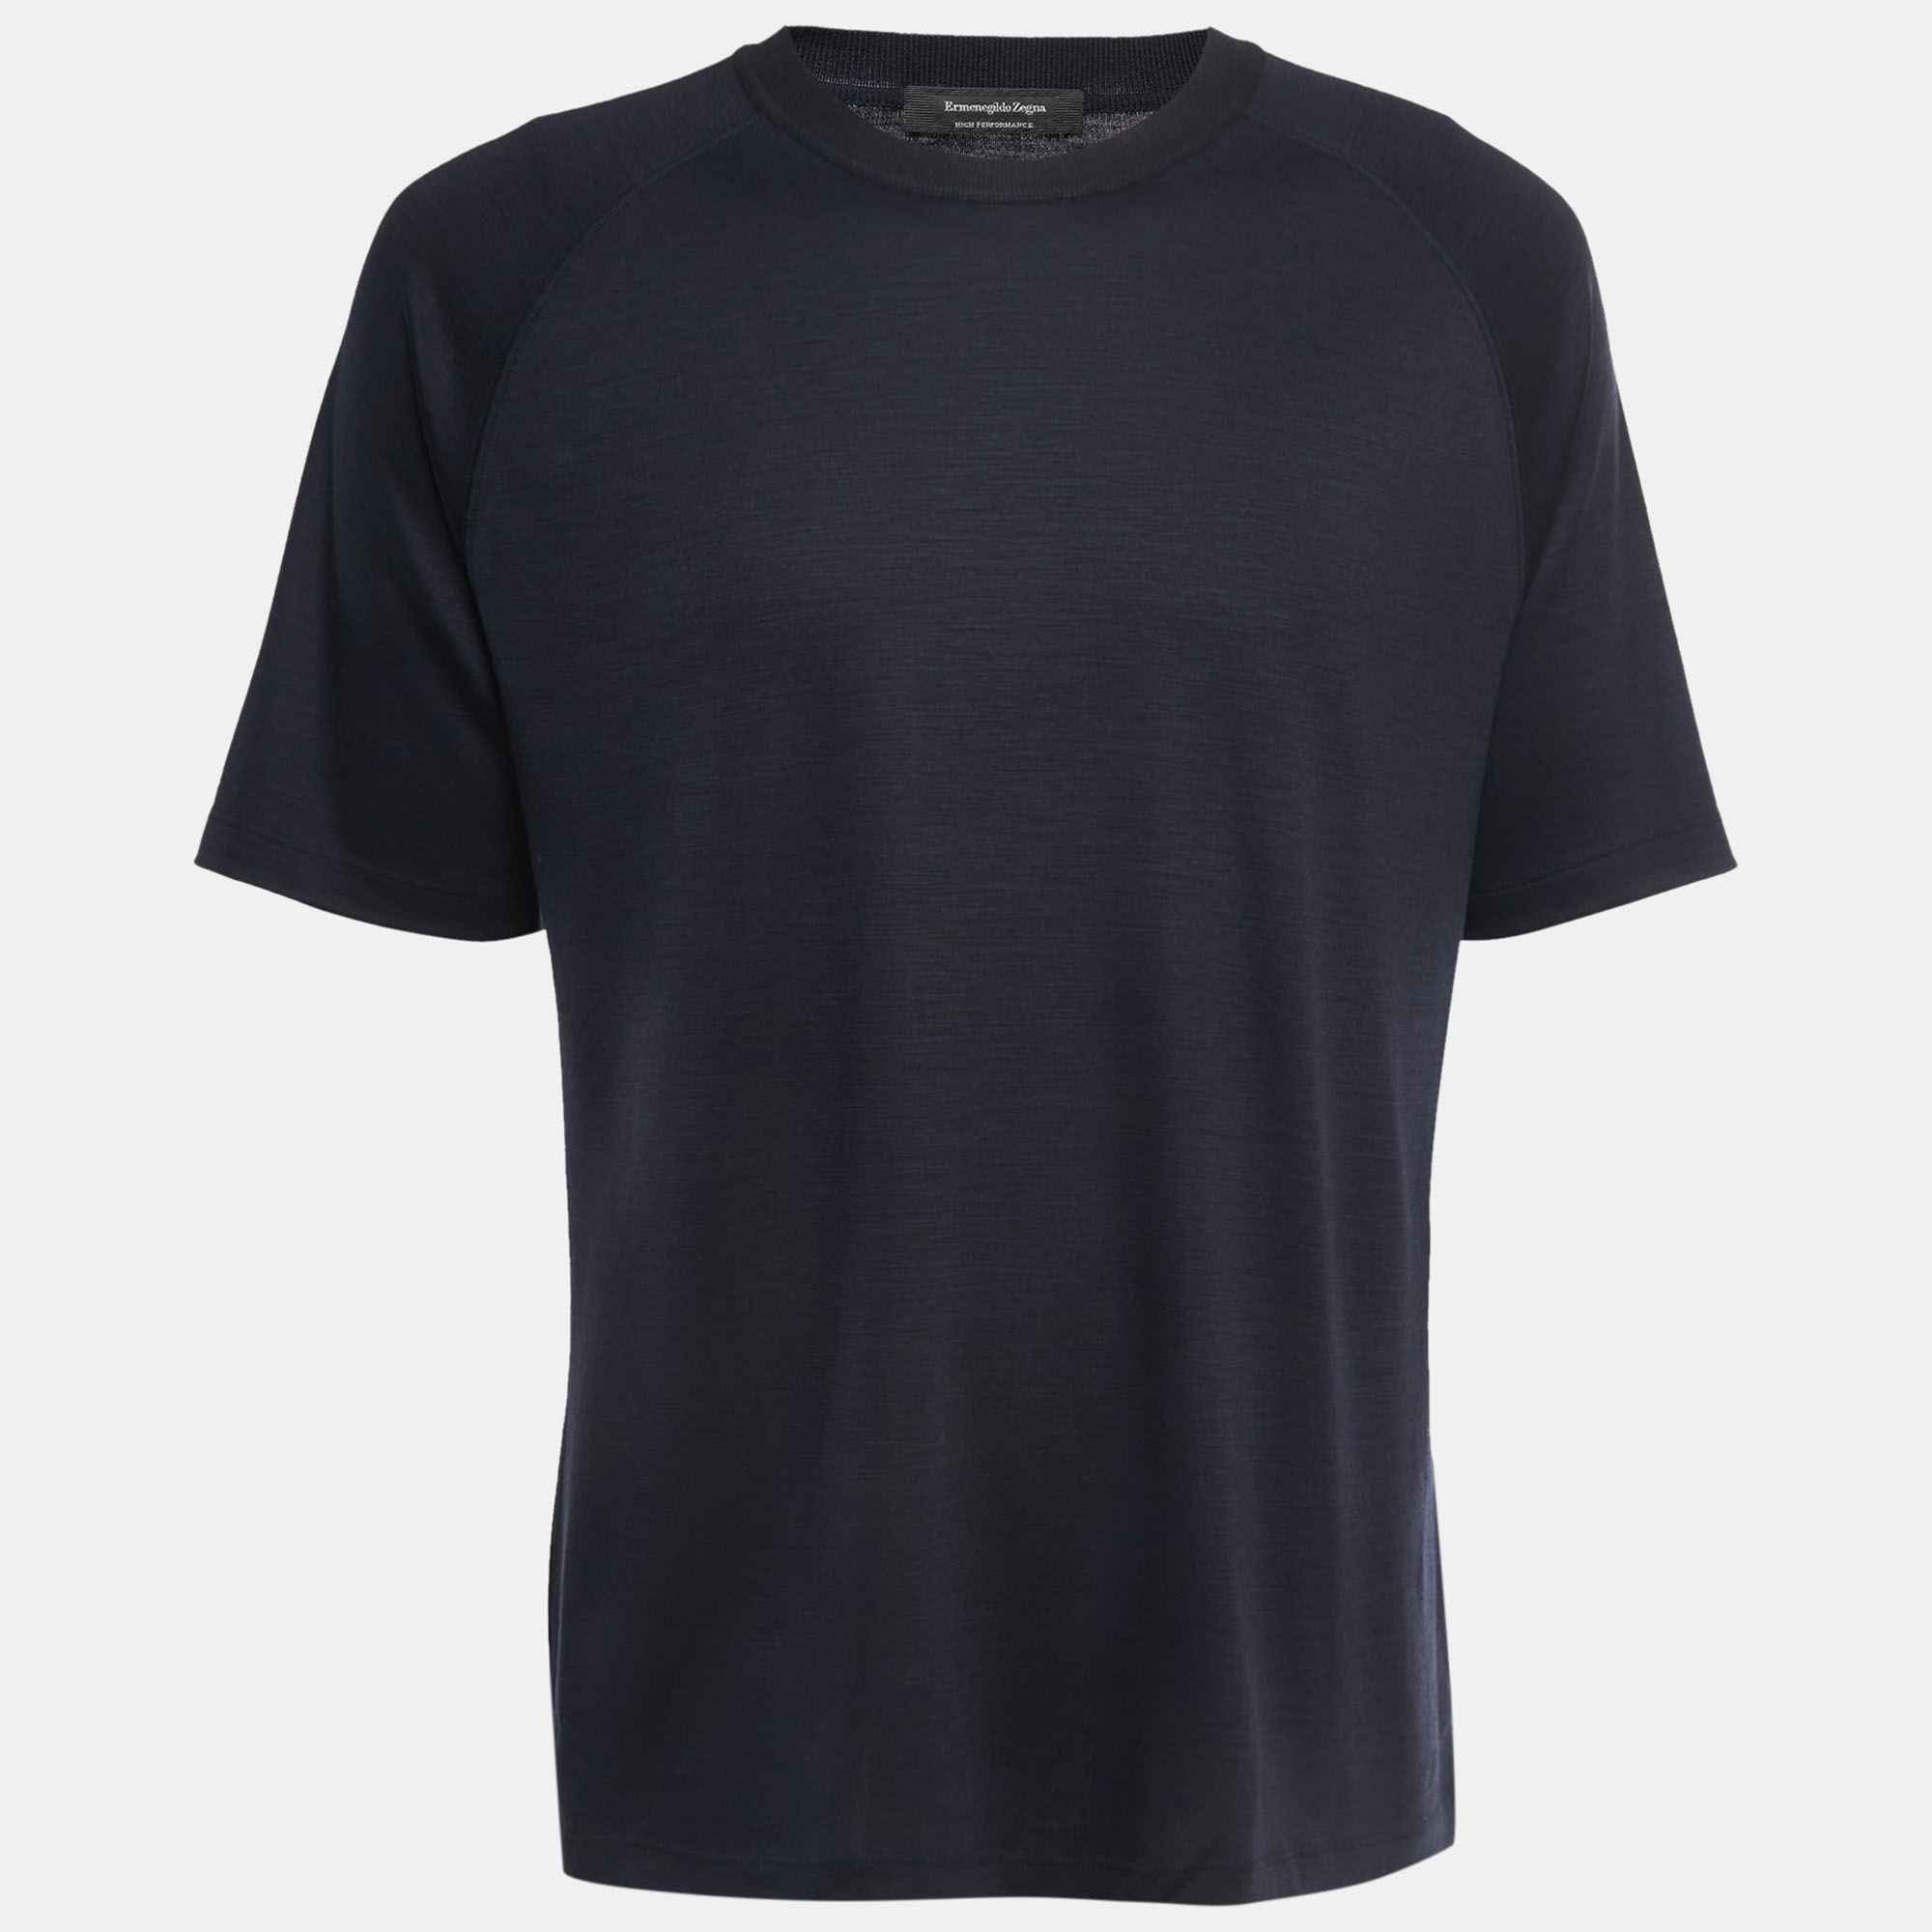 Ermenegildo Zegna Black Wool Crew Neck Half Sleeve T-Shirt L